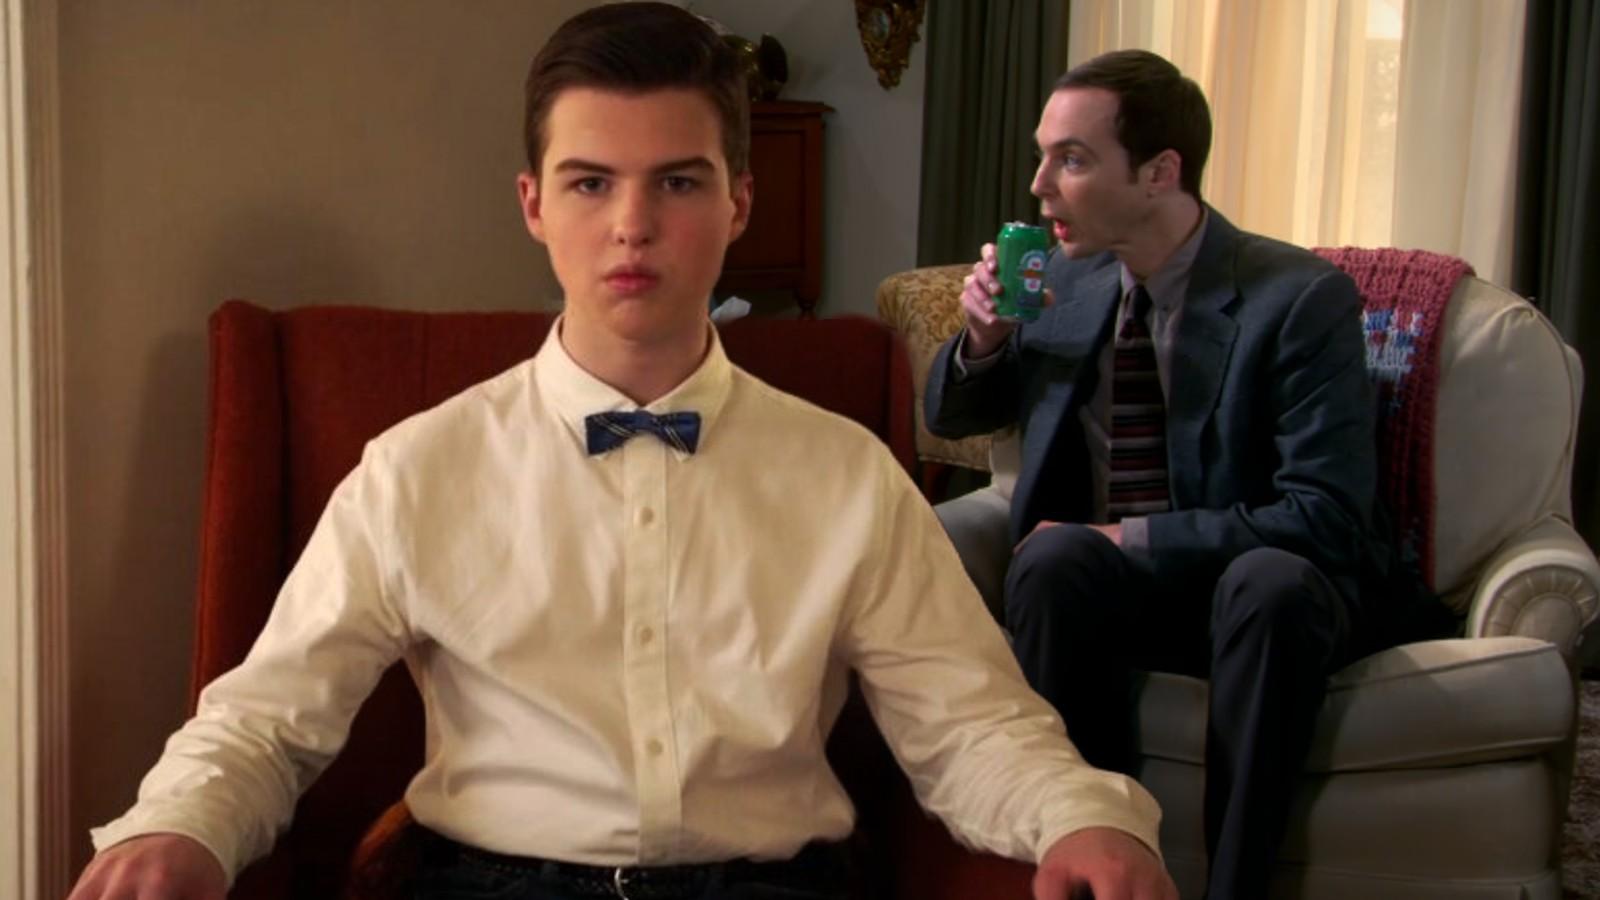 Sheldon in Young Sheldon Season 7 Episode 12 and Jim Parsons in The Big Bang Theory